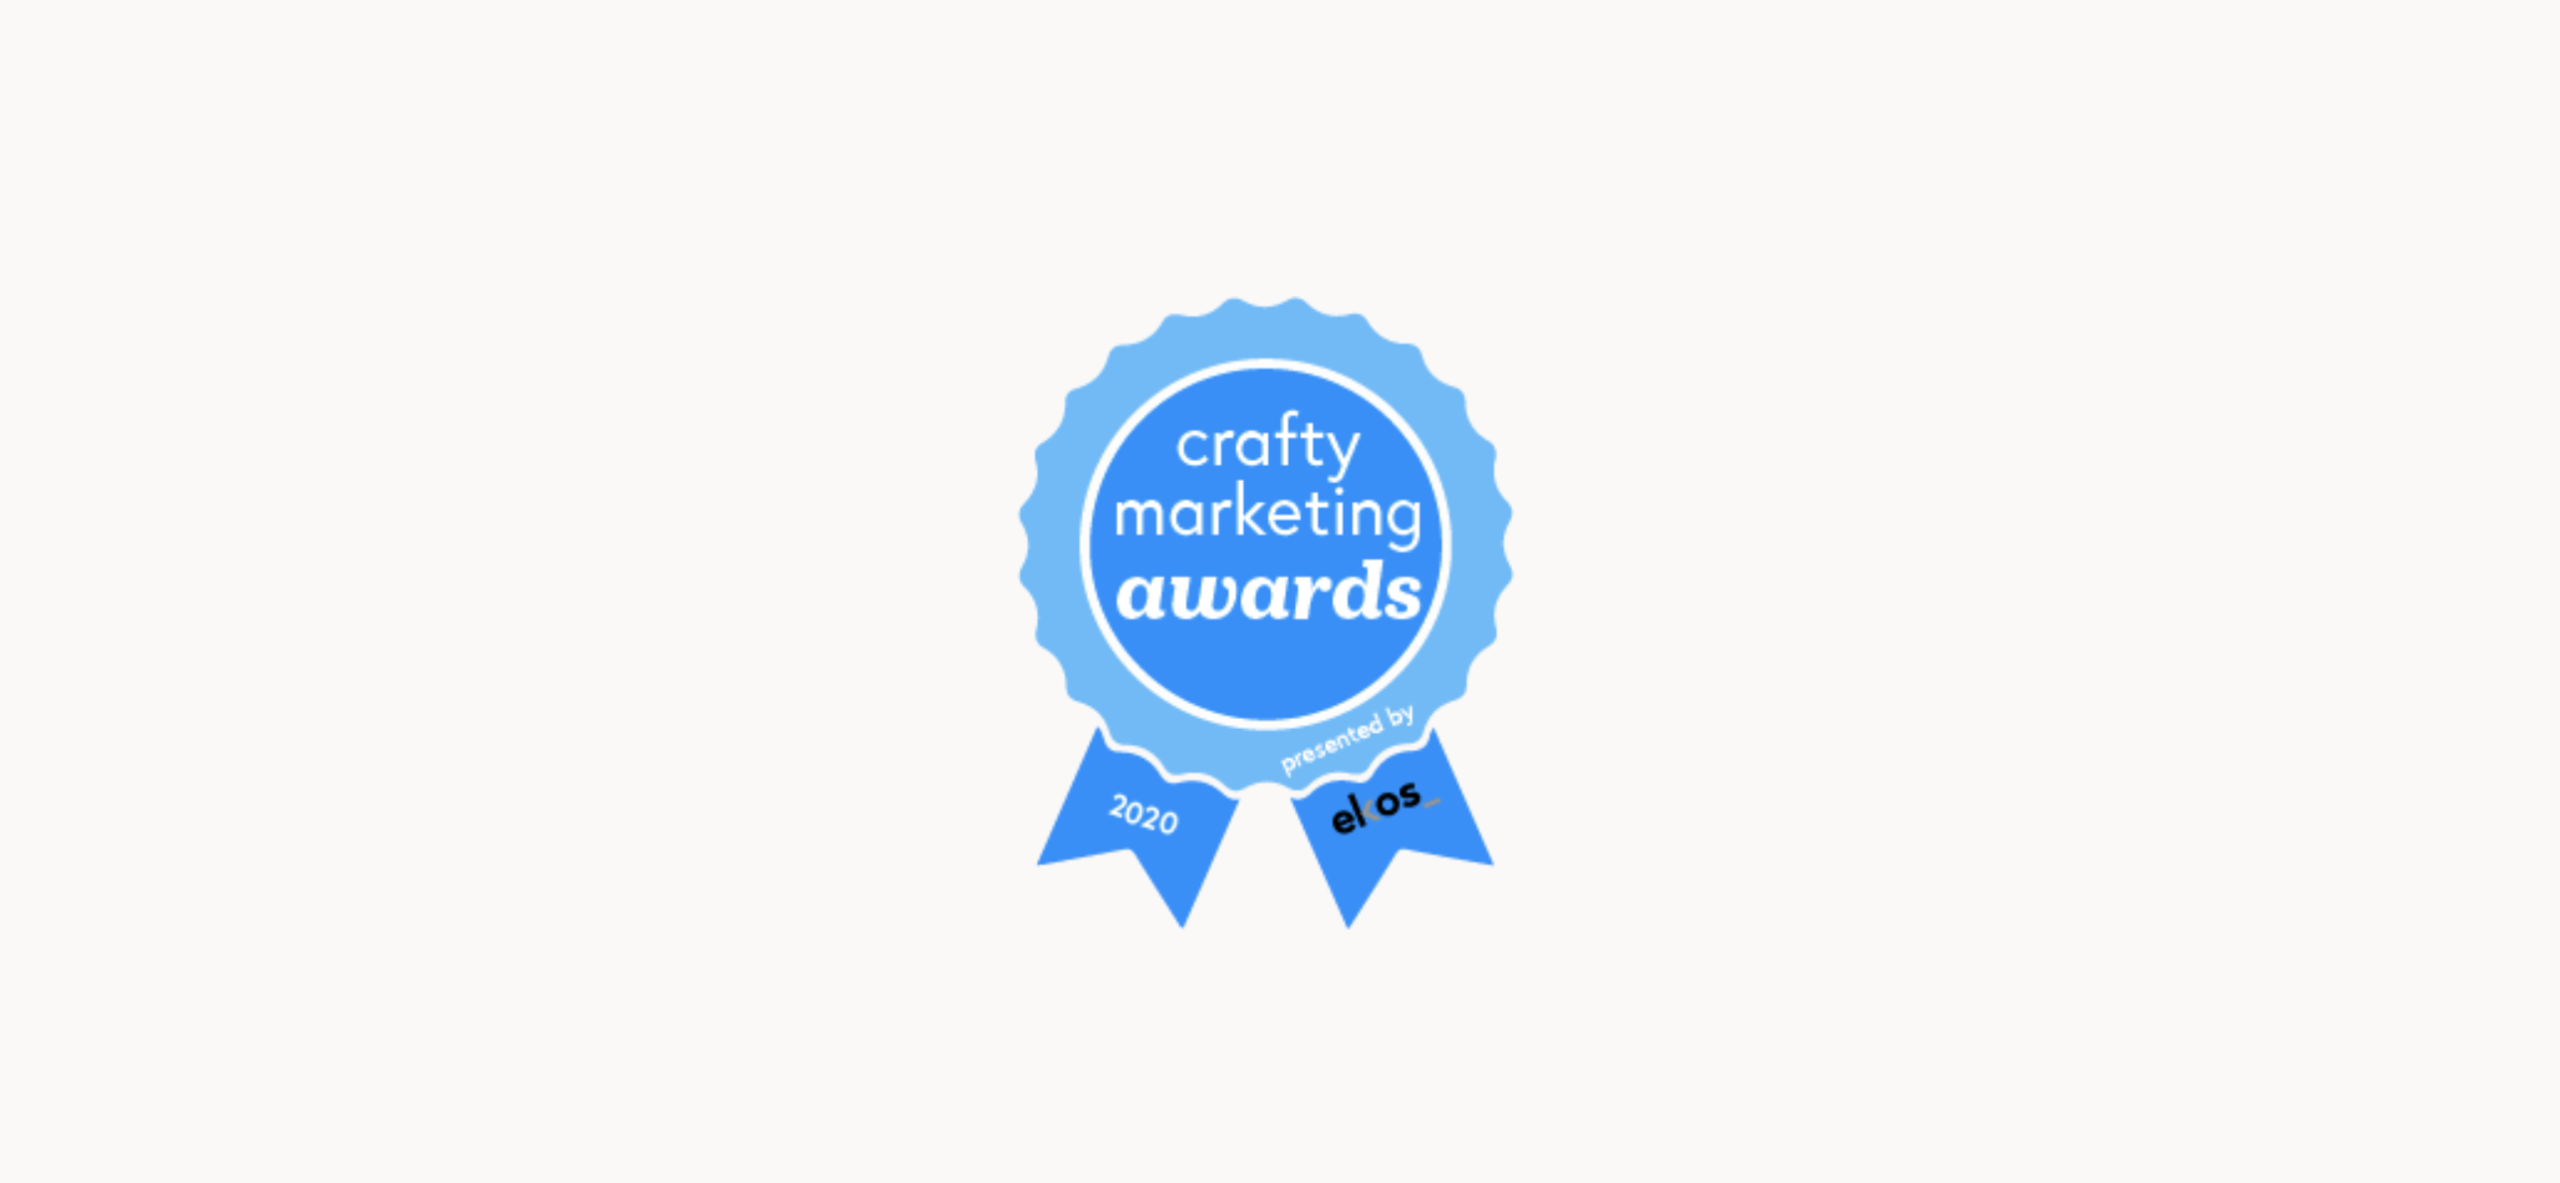 crafty marketing awards 2020 ribbon